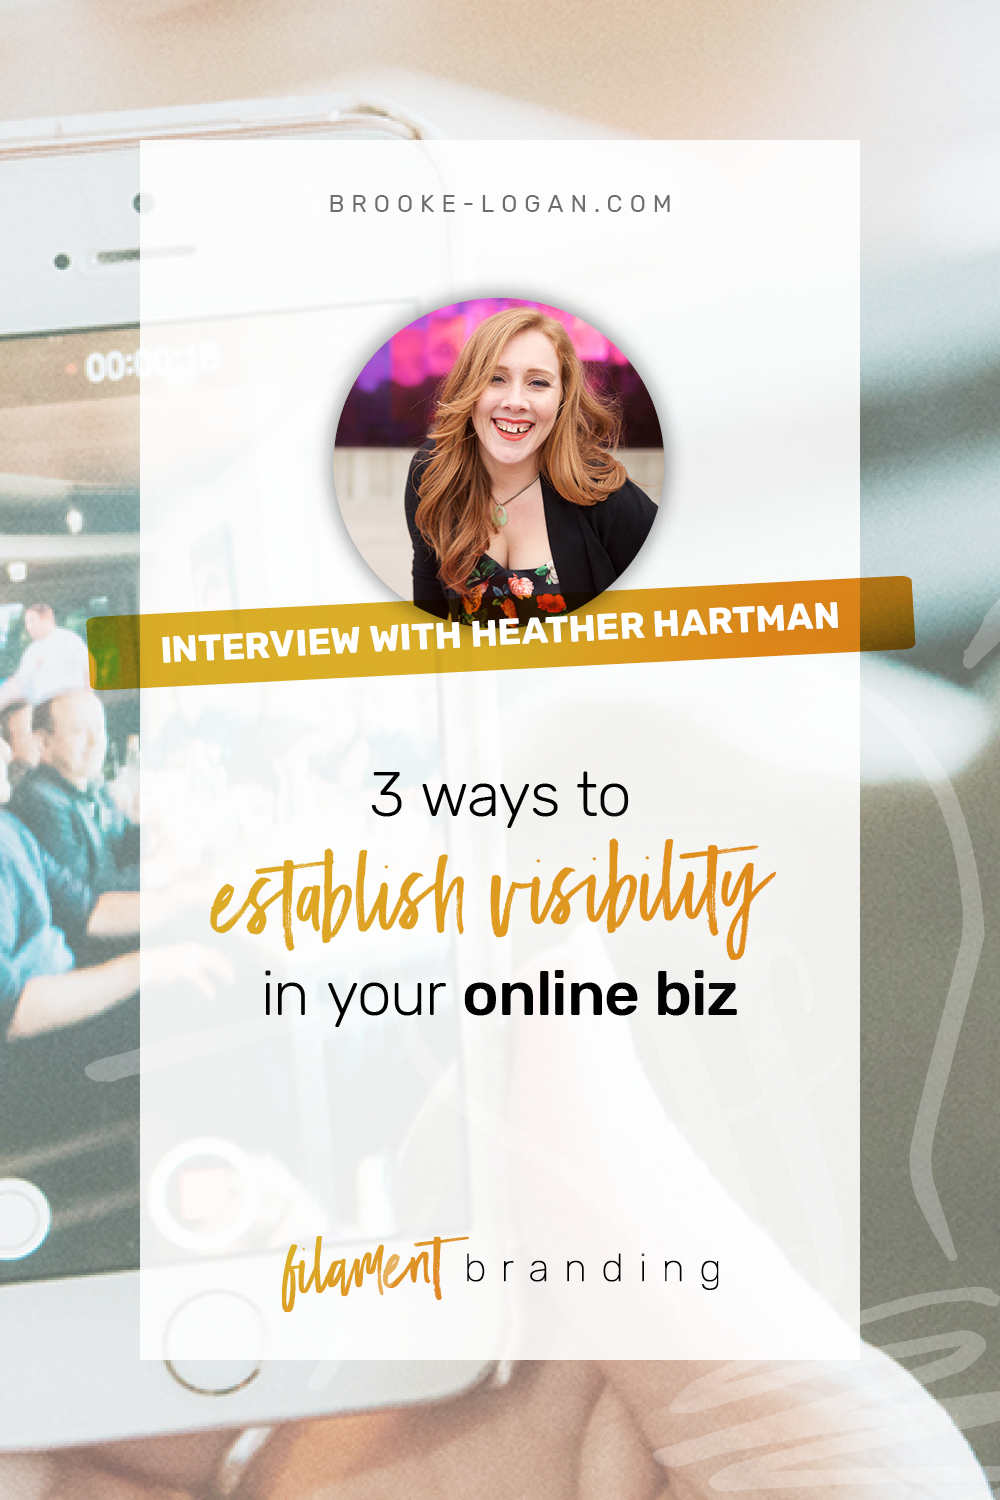 Ep 9: 3 ways to establish visibility in your online biz with Heather Hartman